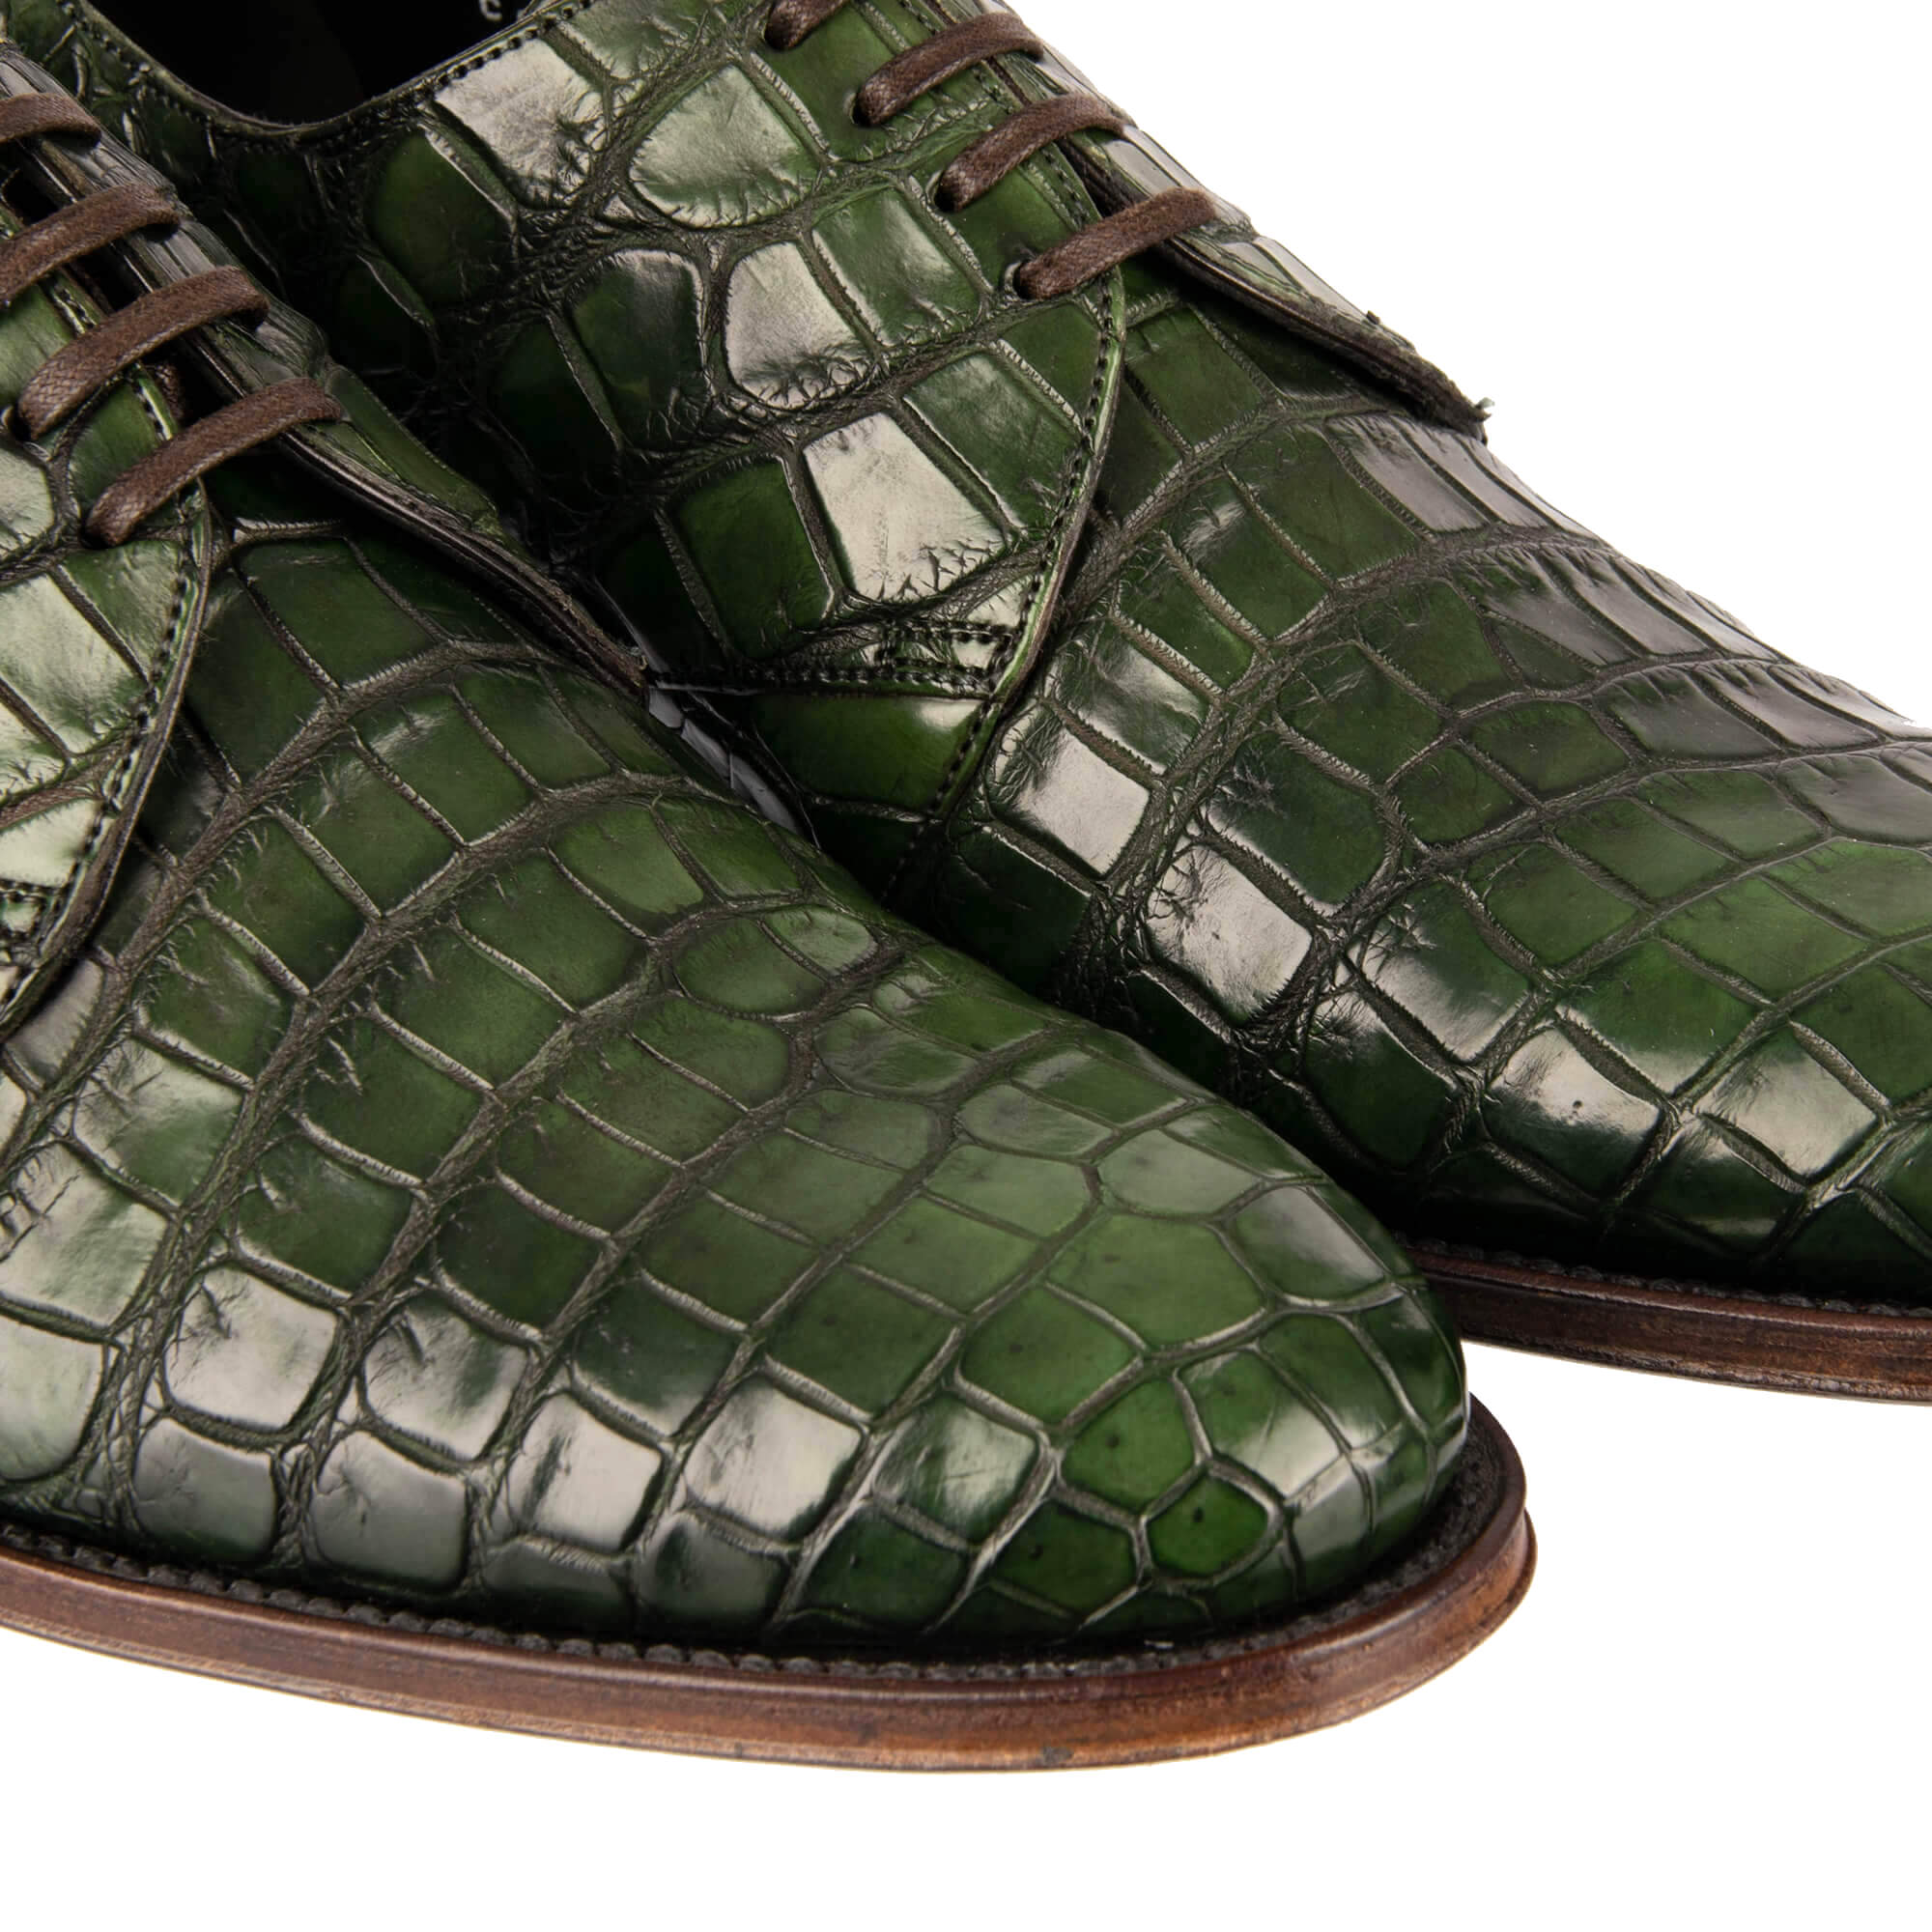 Dolce & Gabbana Formal Crocodile Leather Shoes NAPOLI Good Year Green